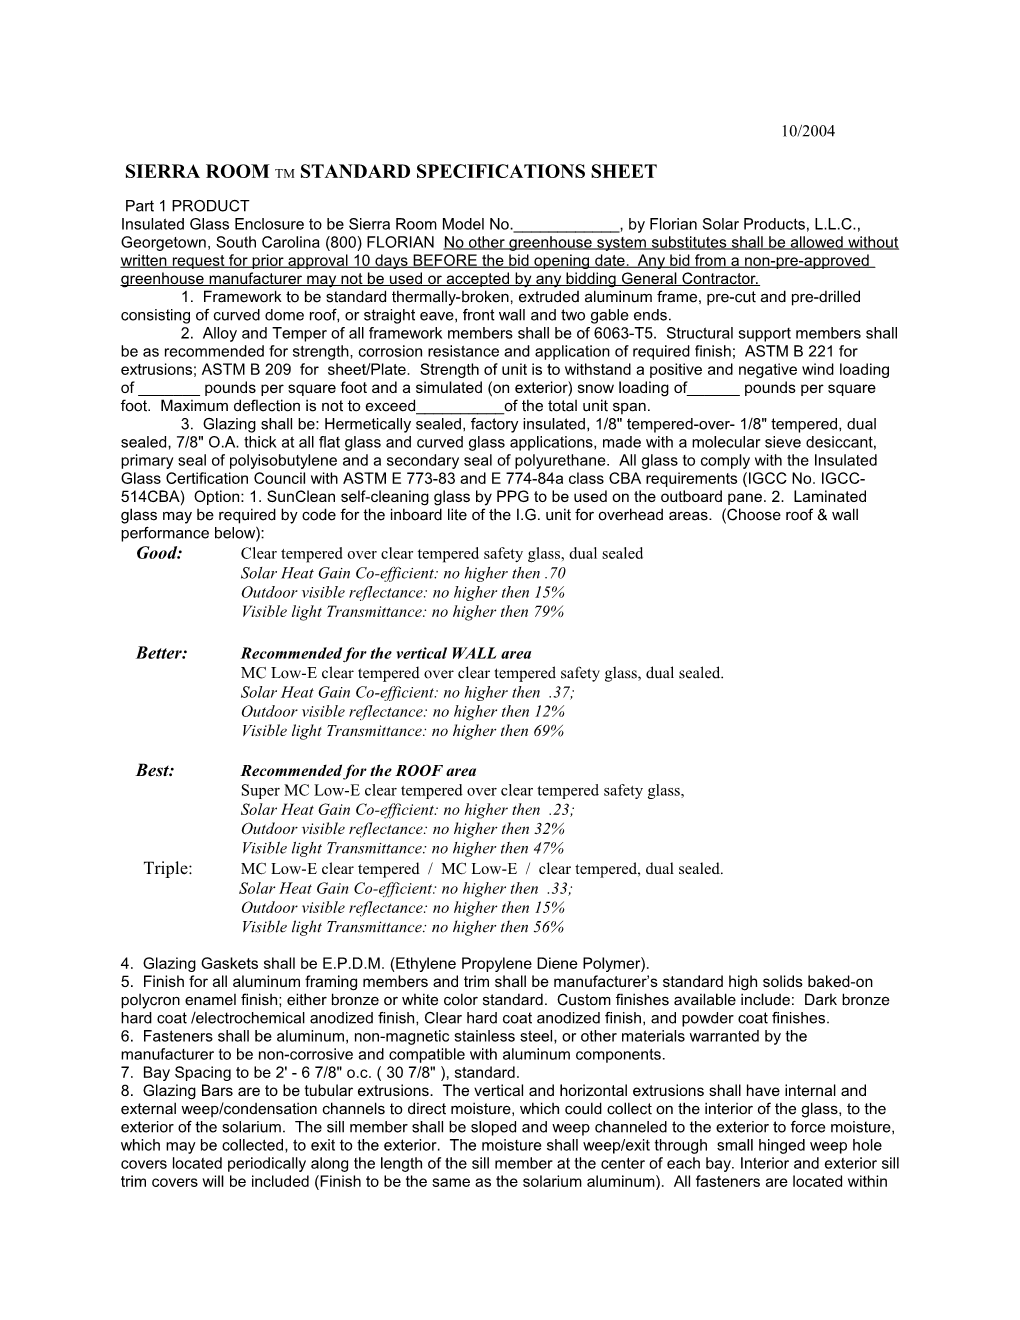 Sierra Room Tm Standard Specifications Sheet